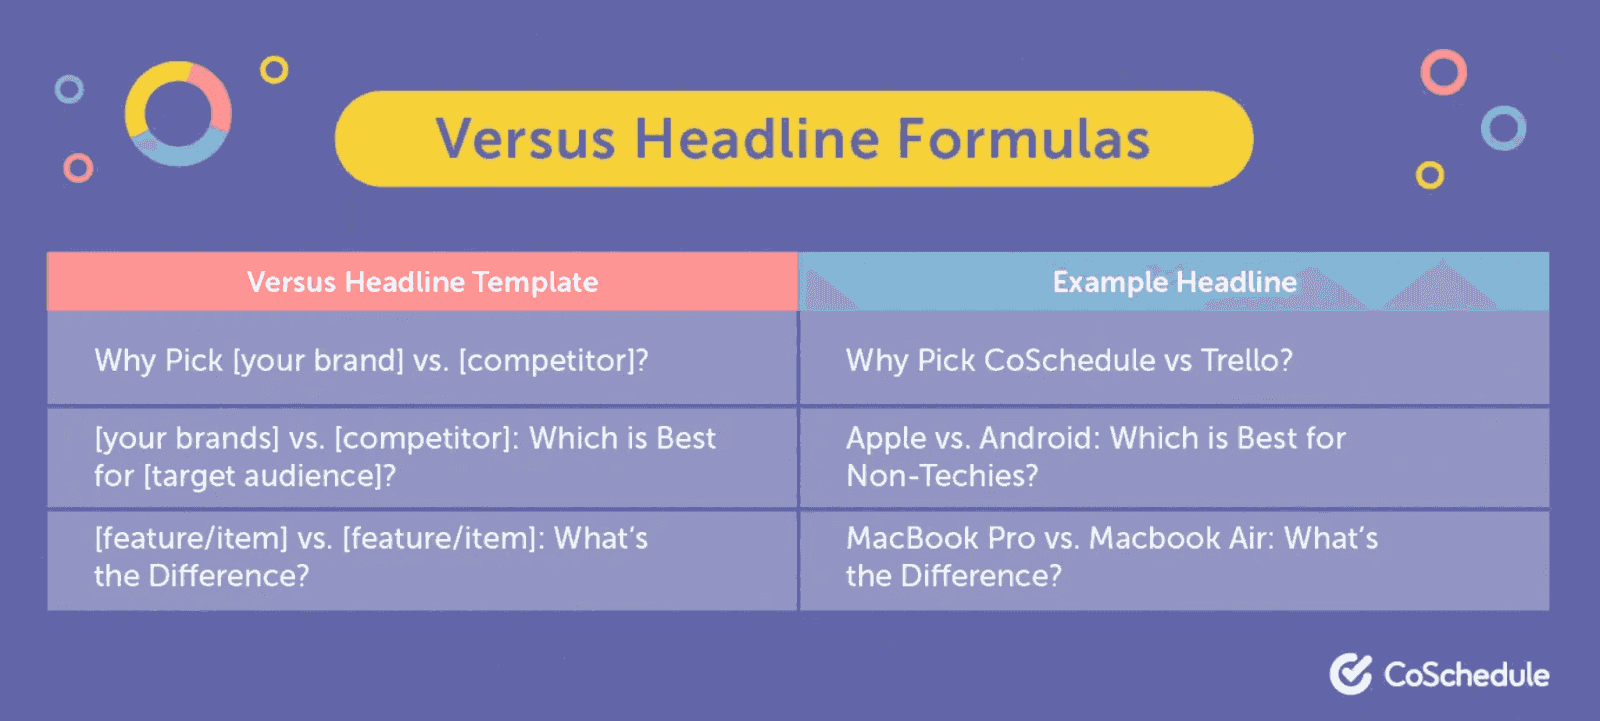 Versus headline formulas with example headline